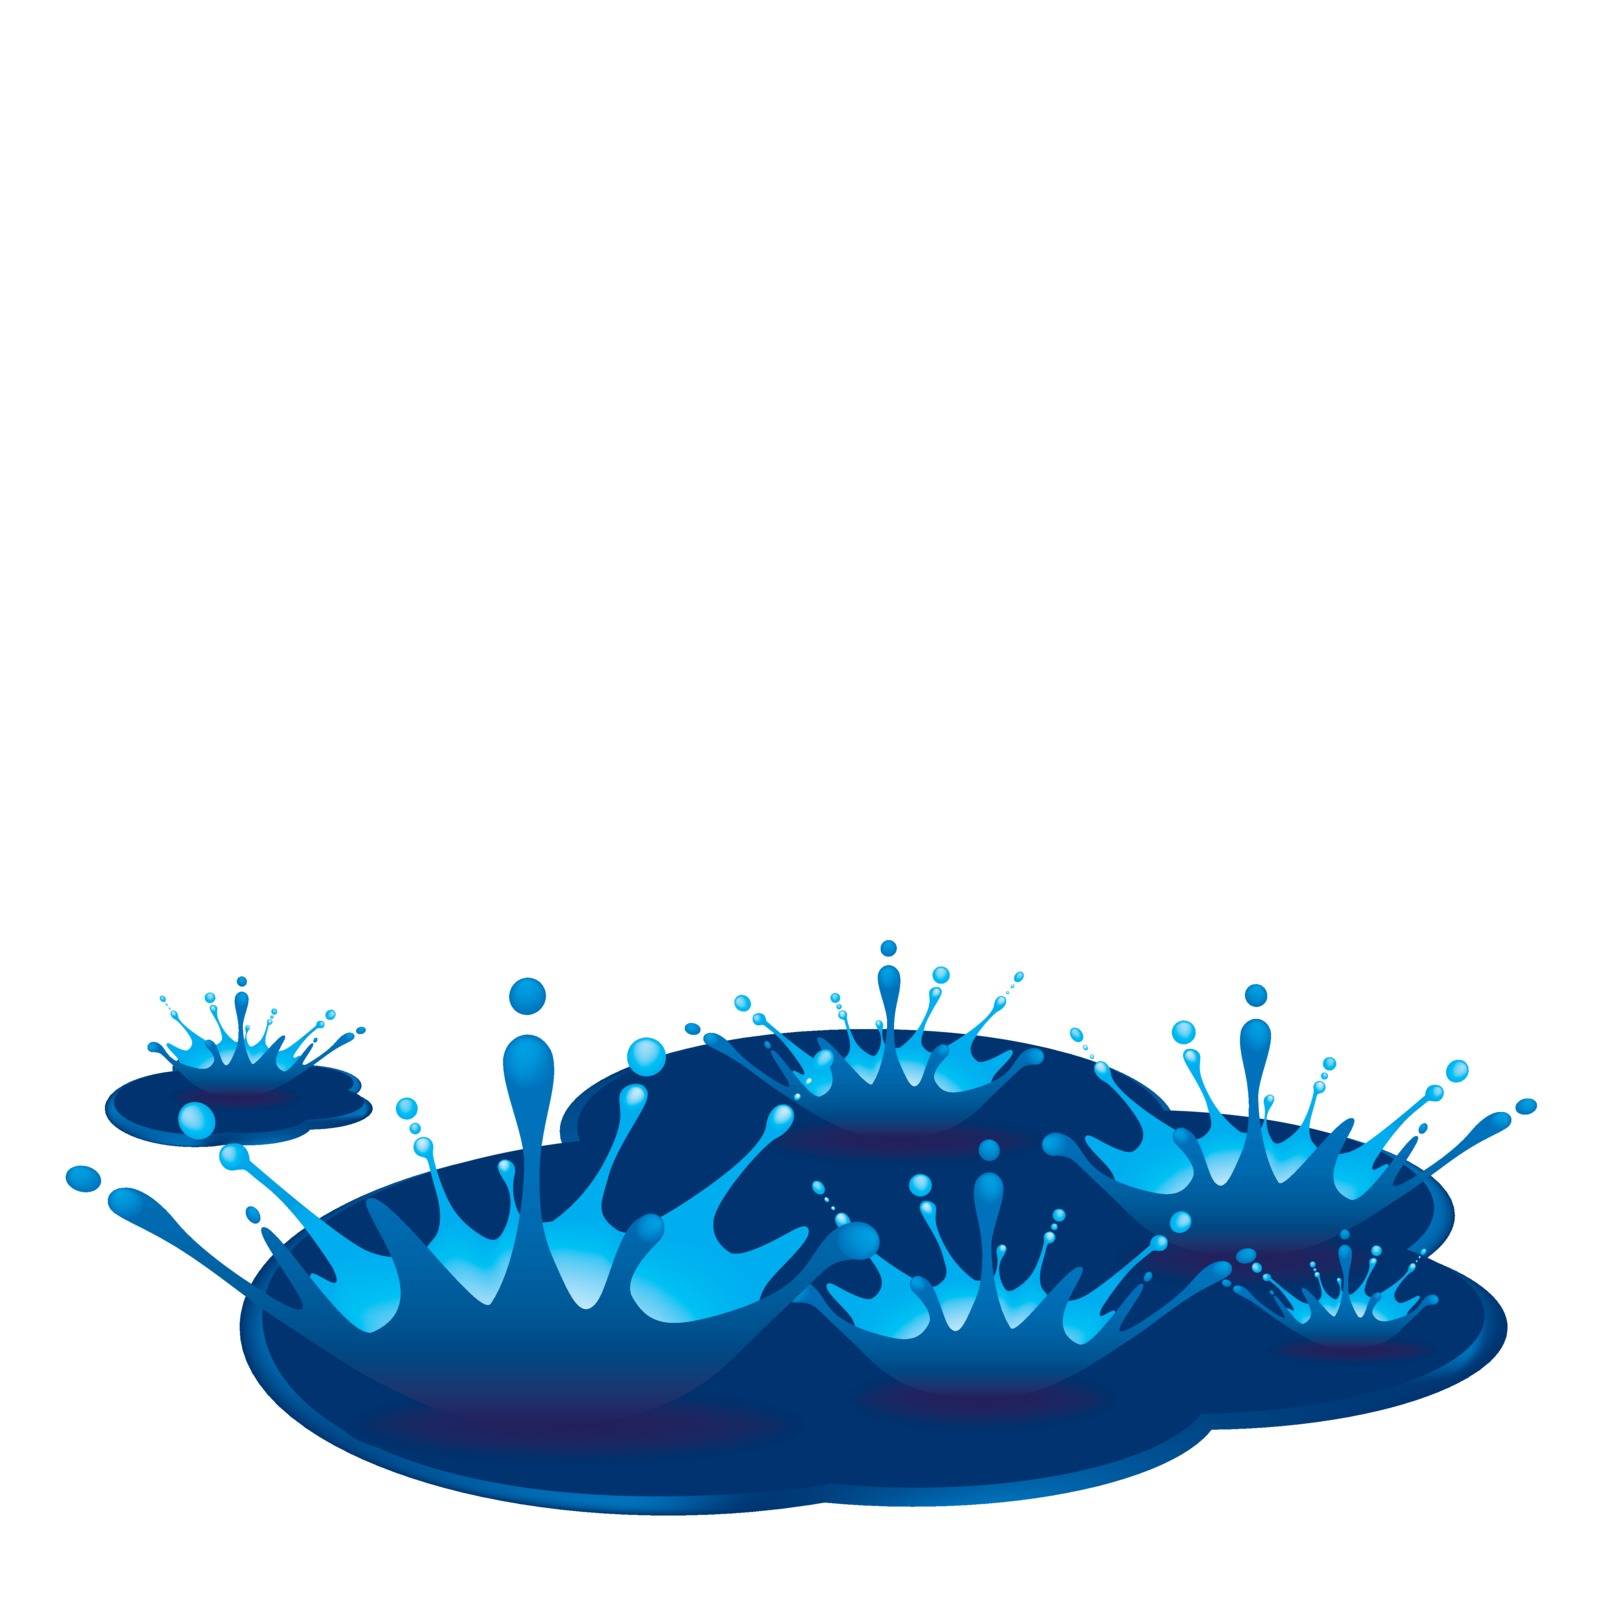 blue splashes of drops, isolated on white background